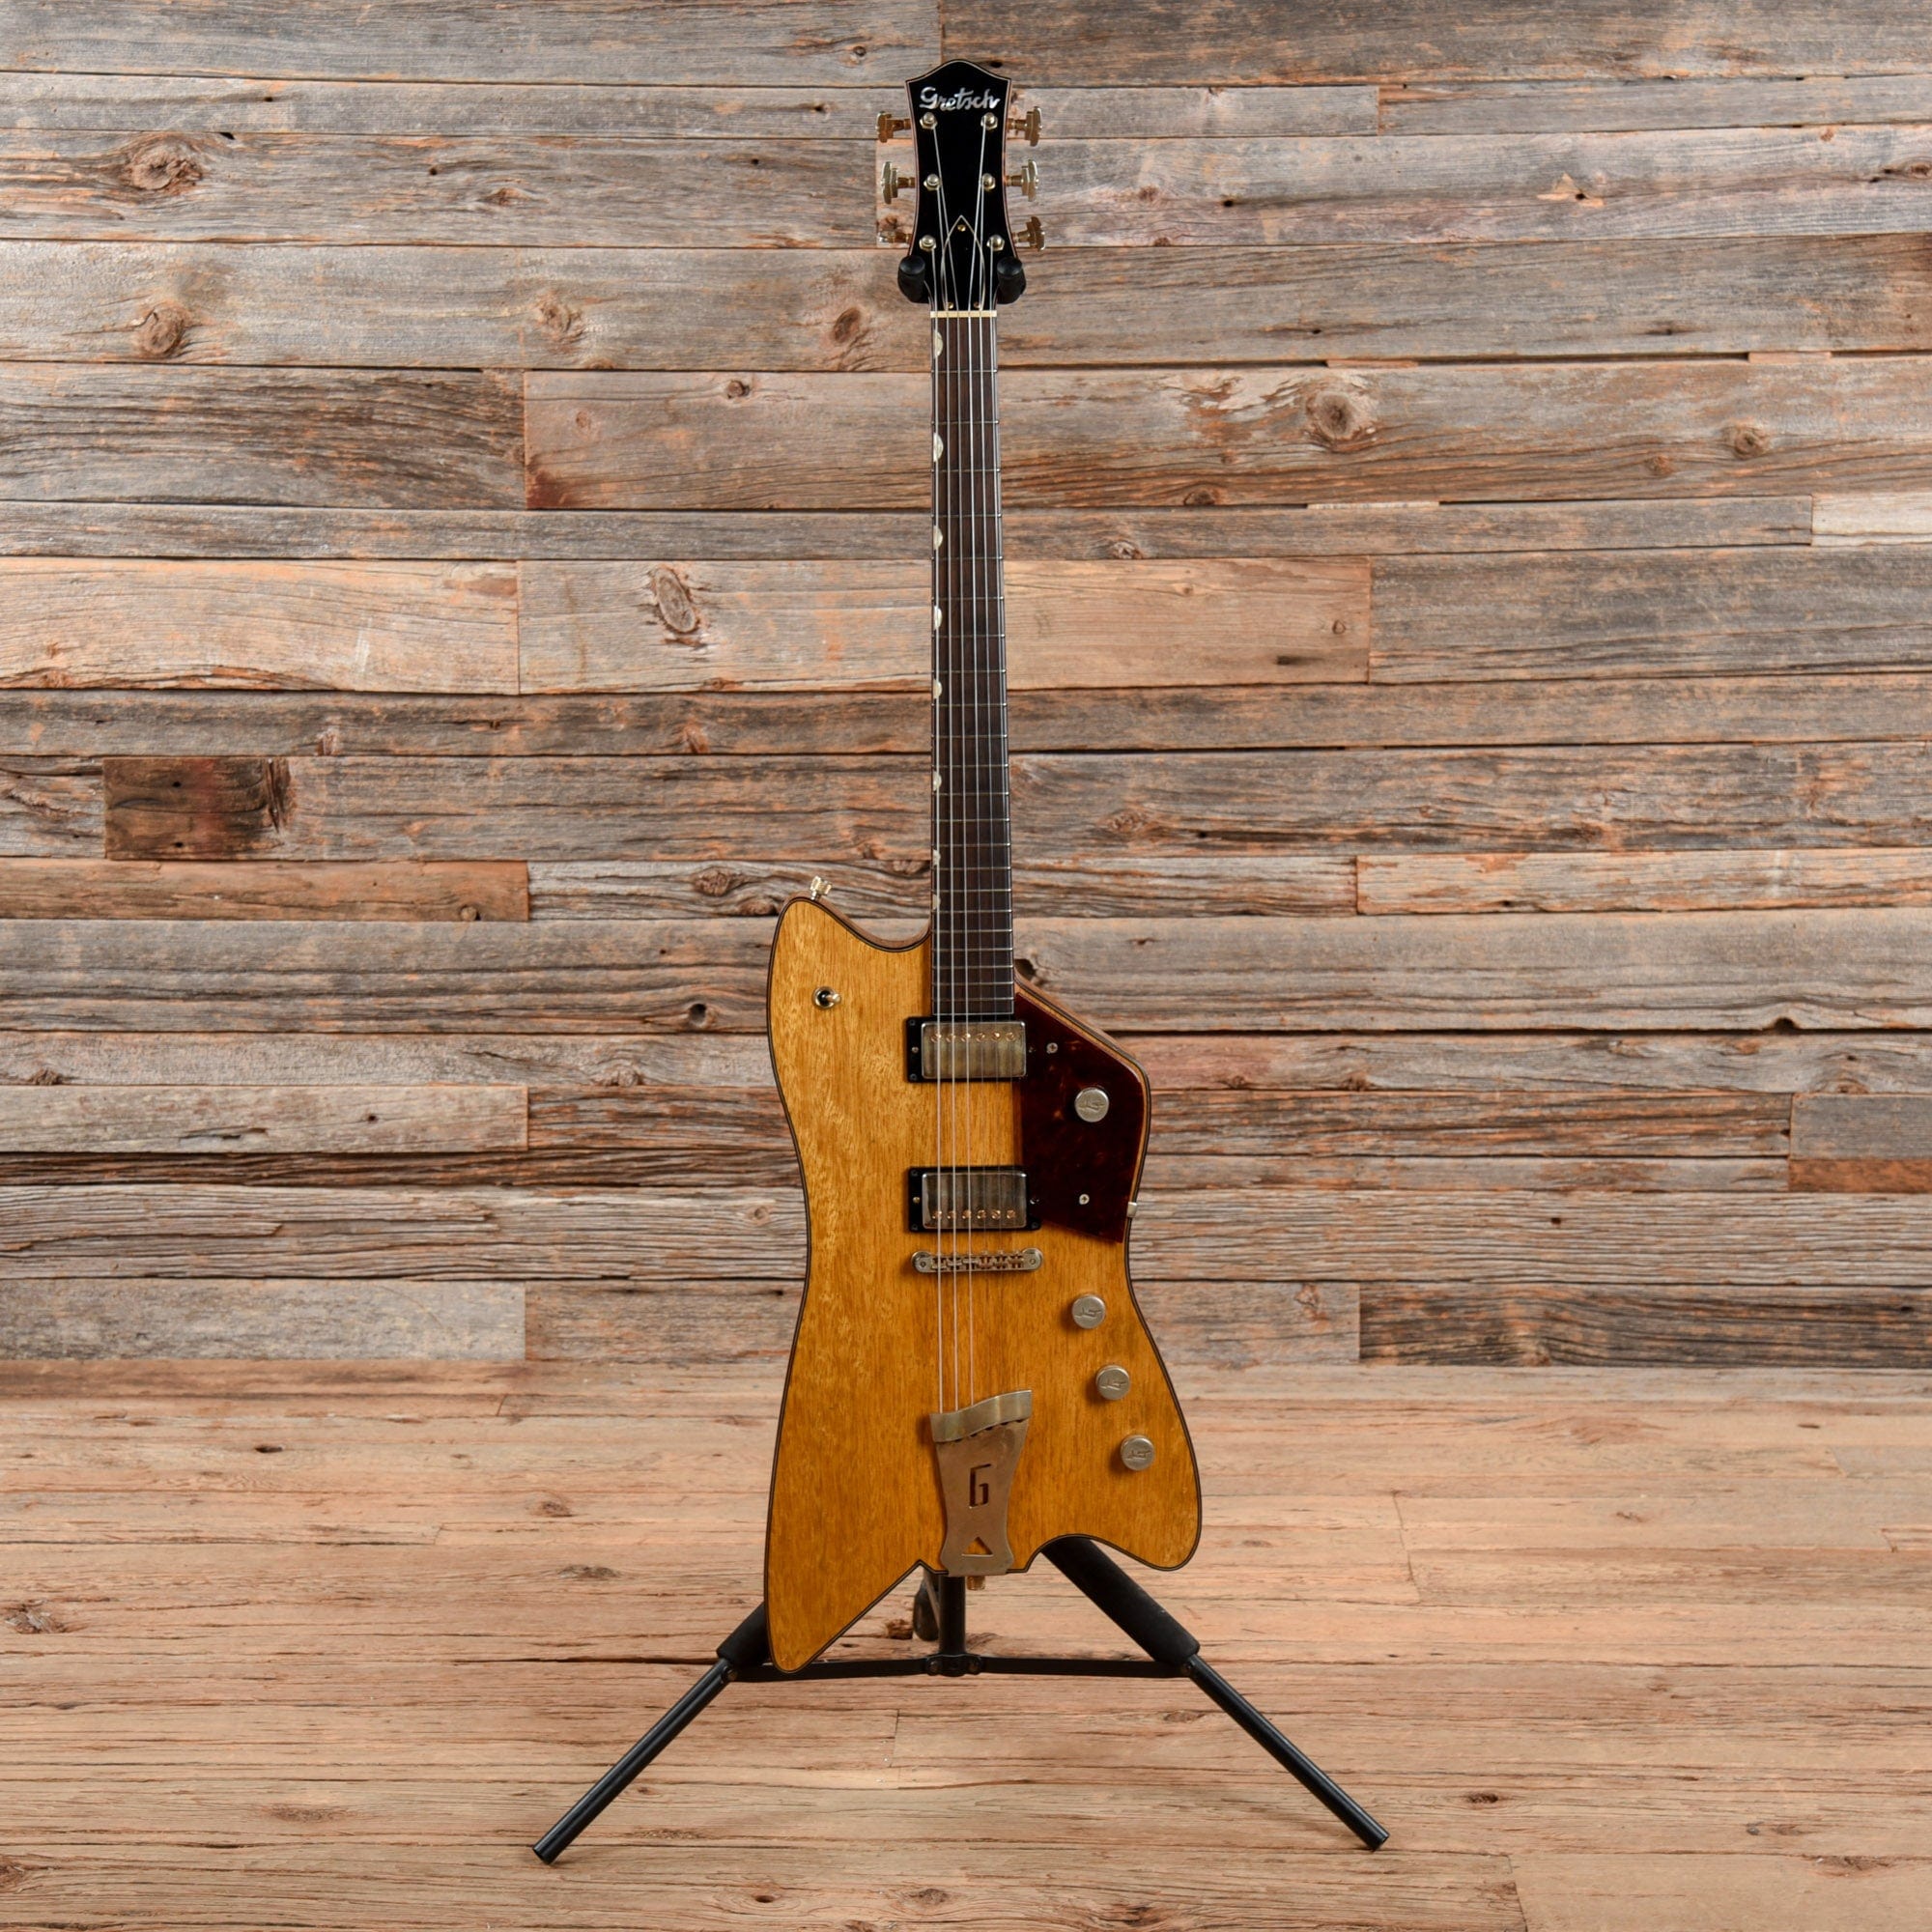 Gretsch Custom Shop Korina Caddy Bo Relic w/Brazilian Rosewood Fingerboard Stephen Stern Masterbuilt Natural 2019 Electric Guitars / Solid Body